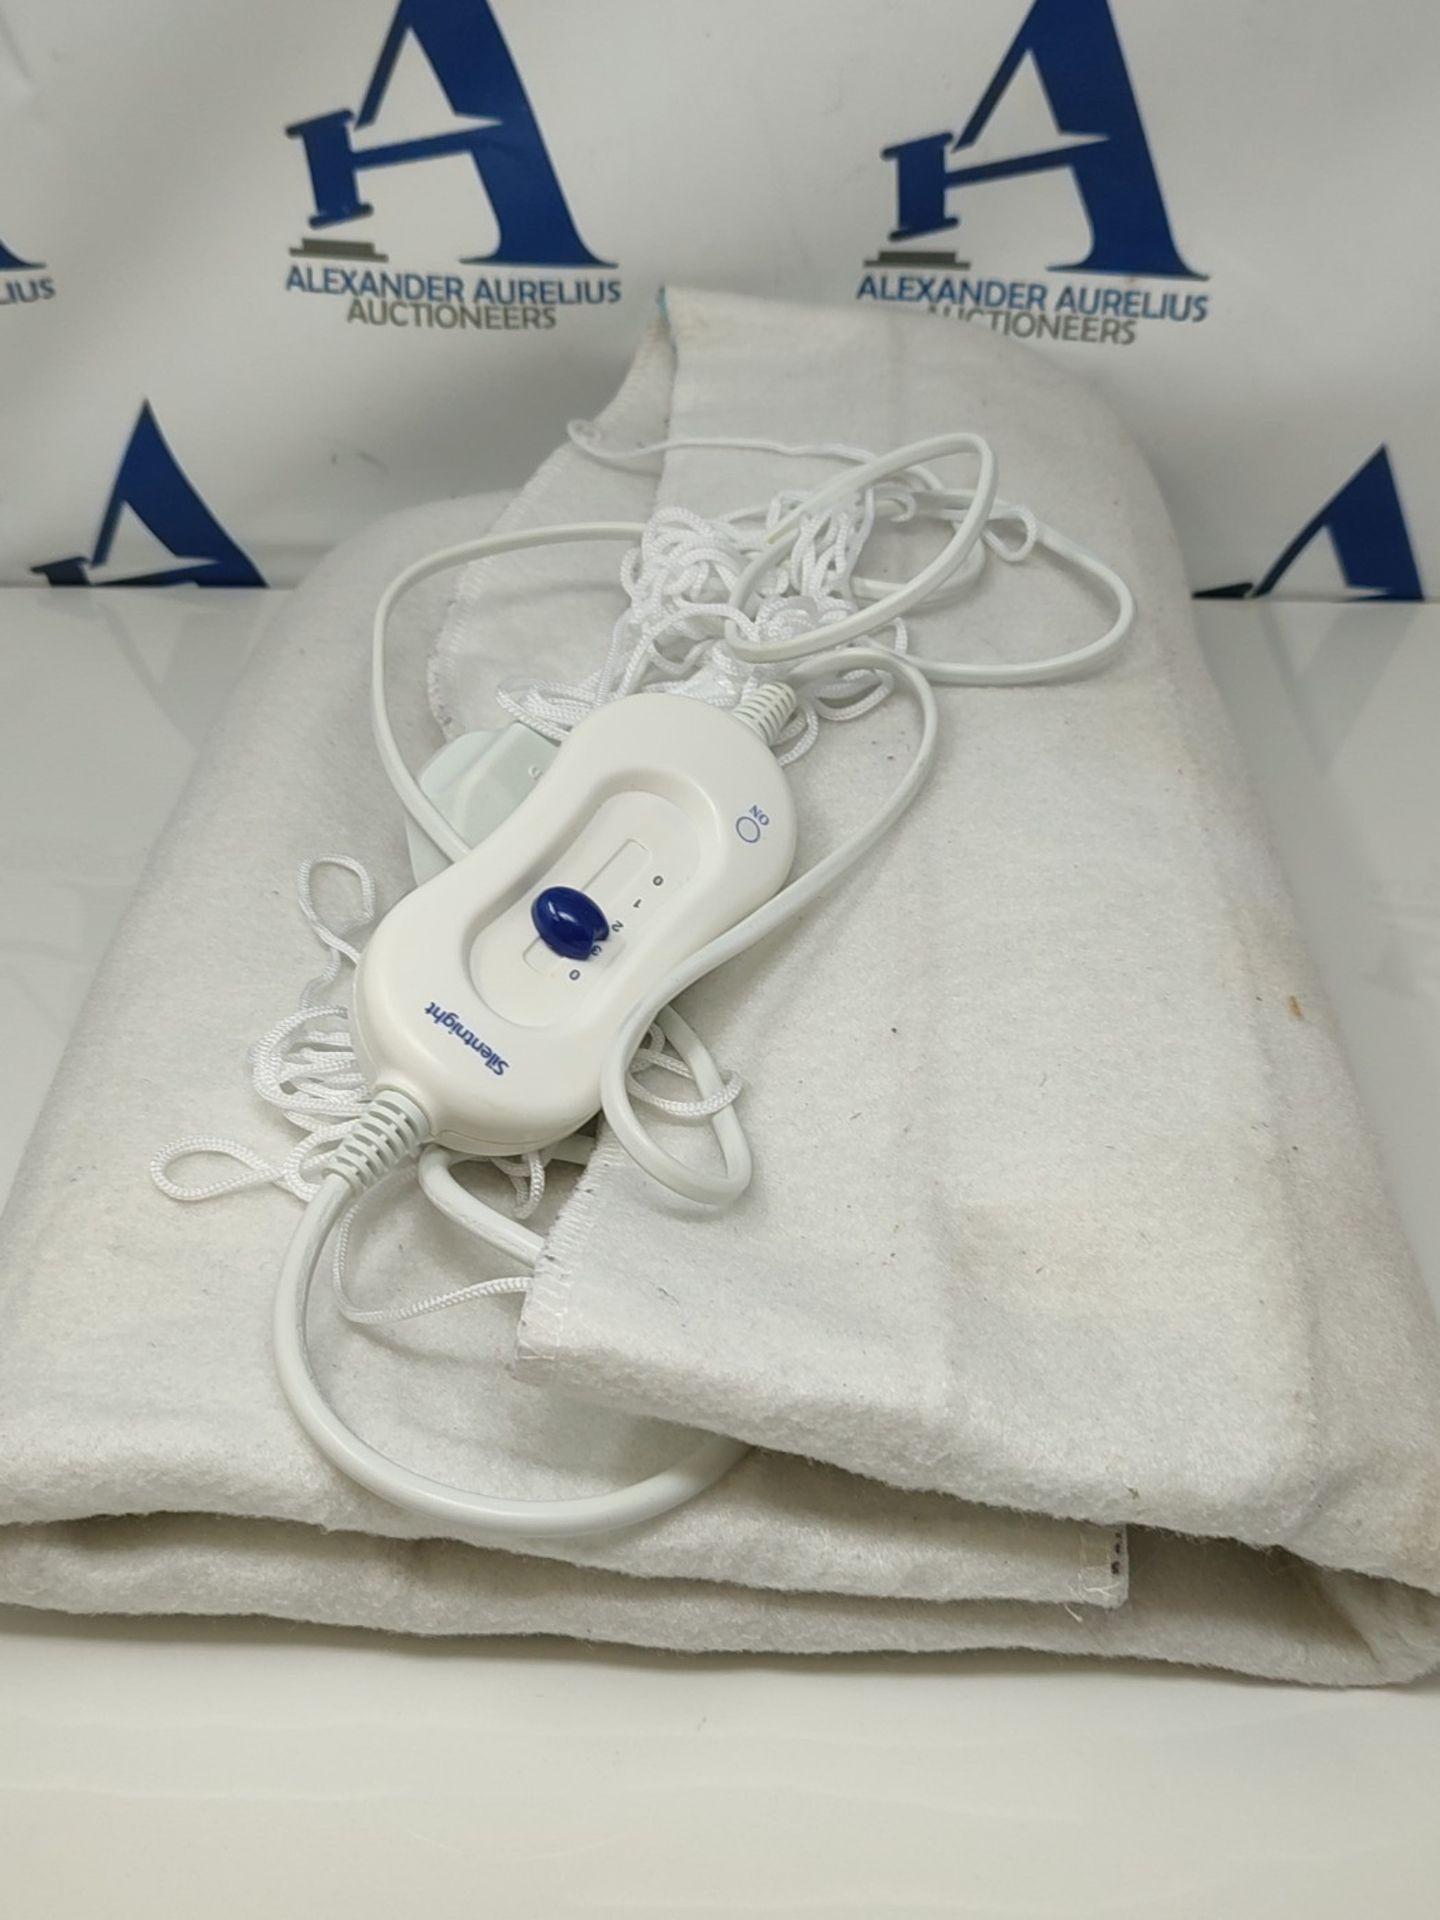 Silentnight Comfort Control Electric Blanket - Image 2 of 2